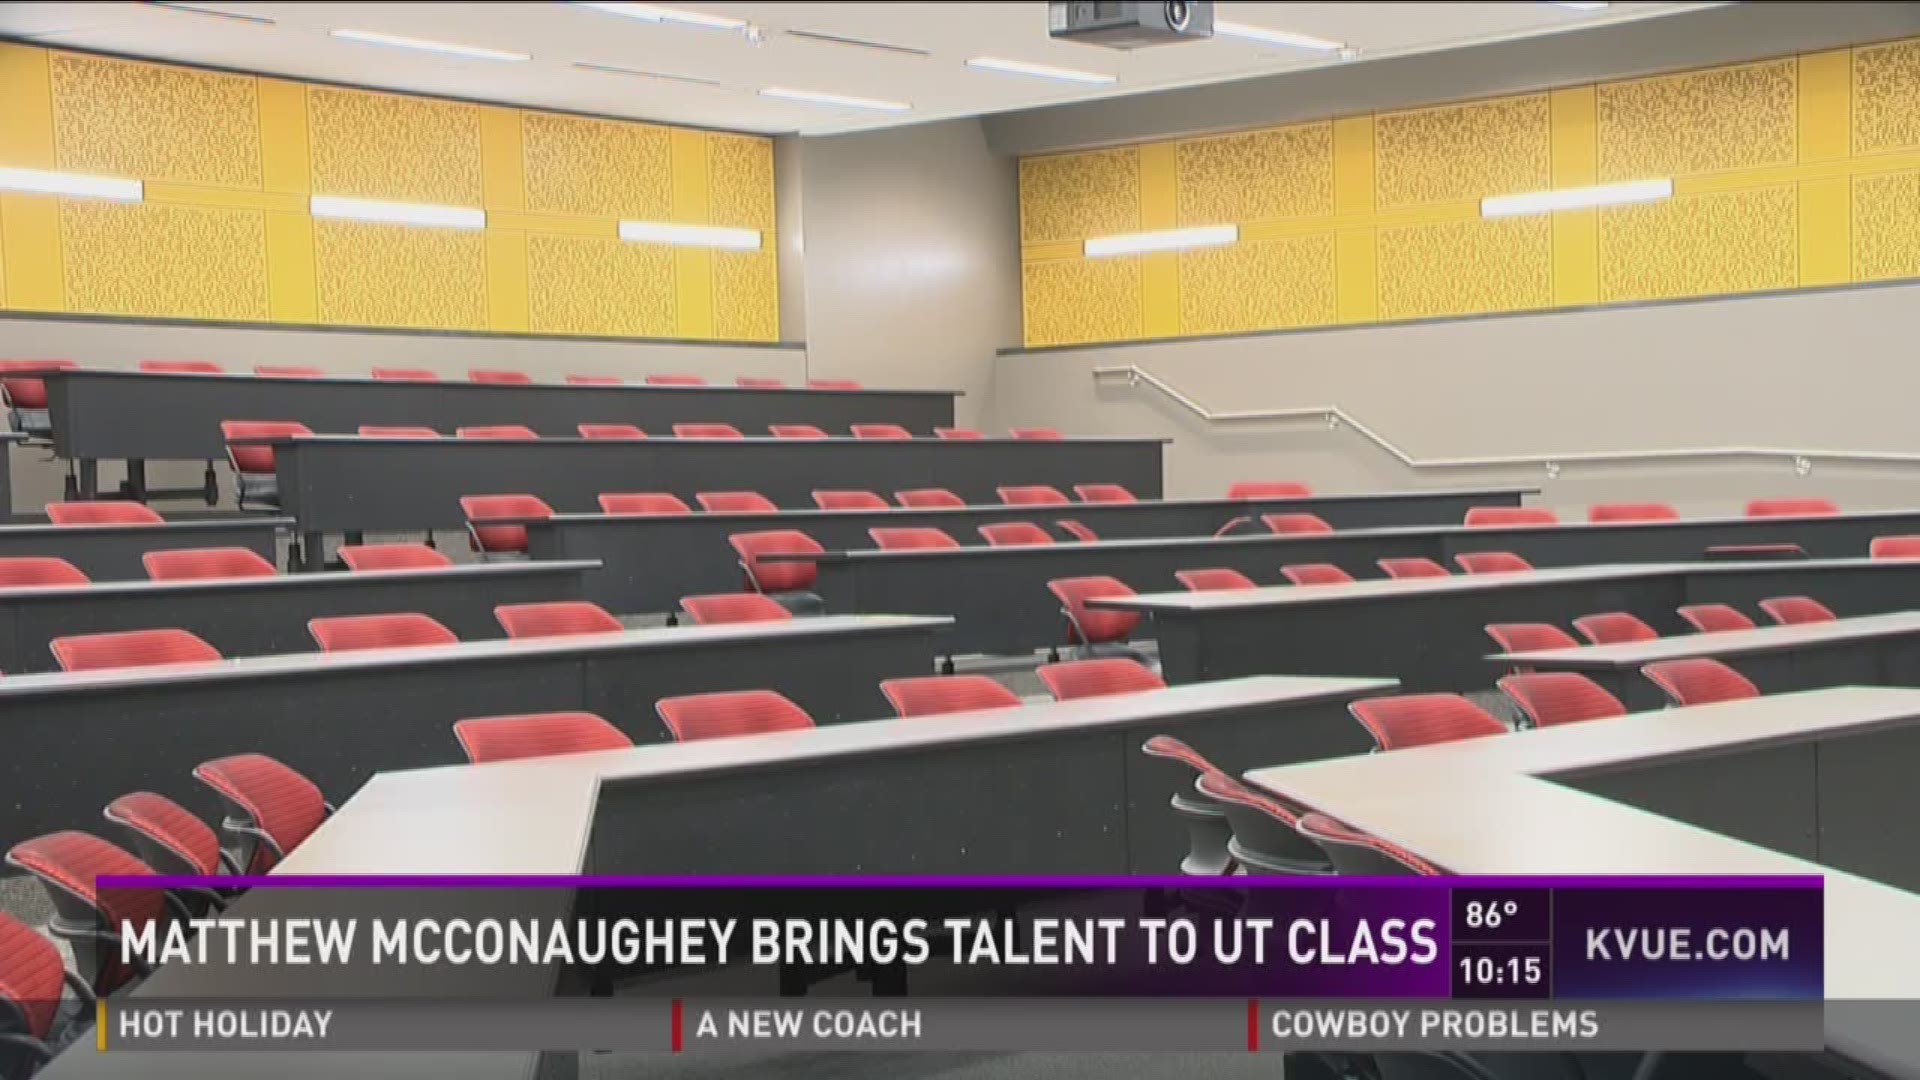 Matthew McConaughey brings talent to UT class